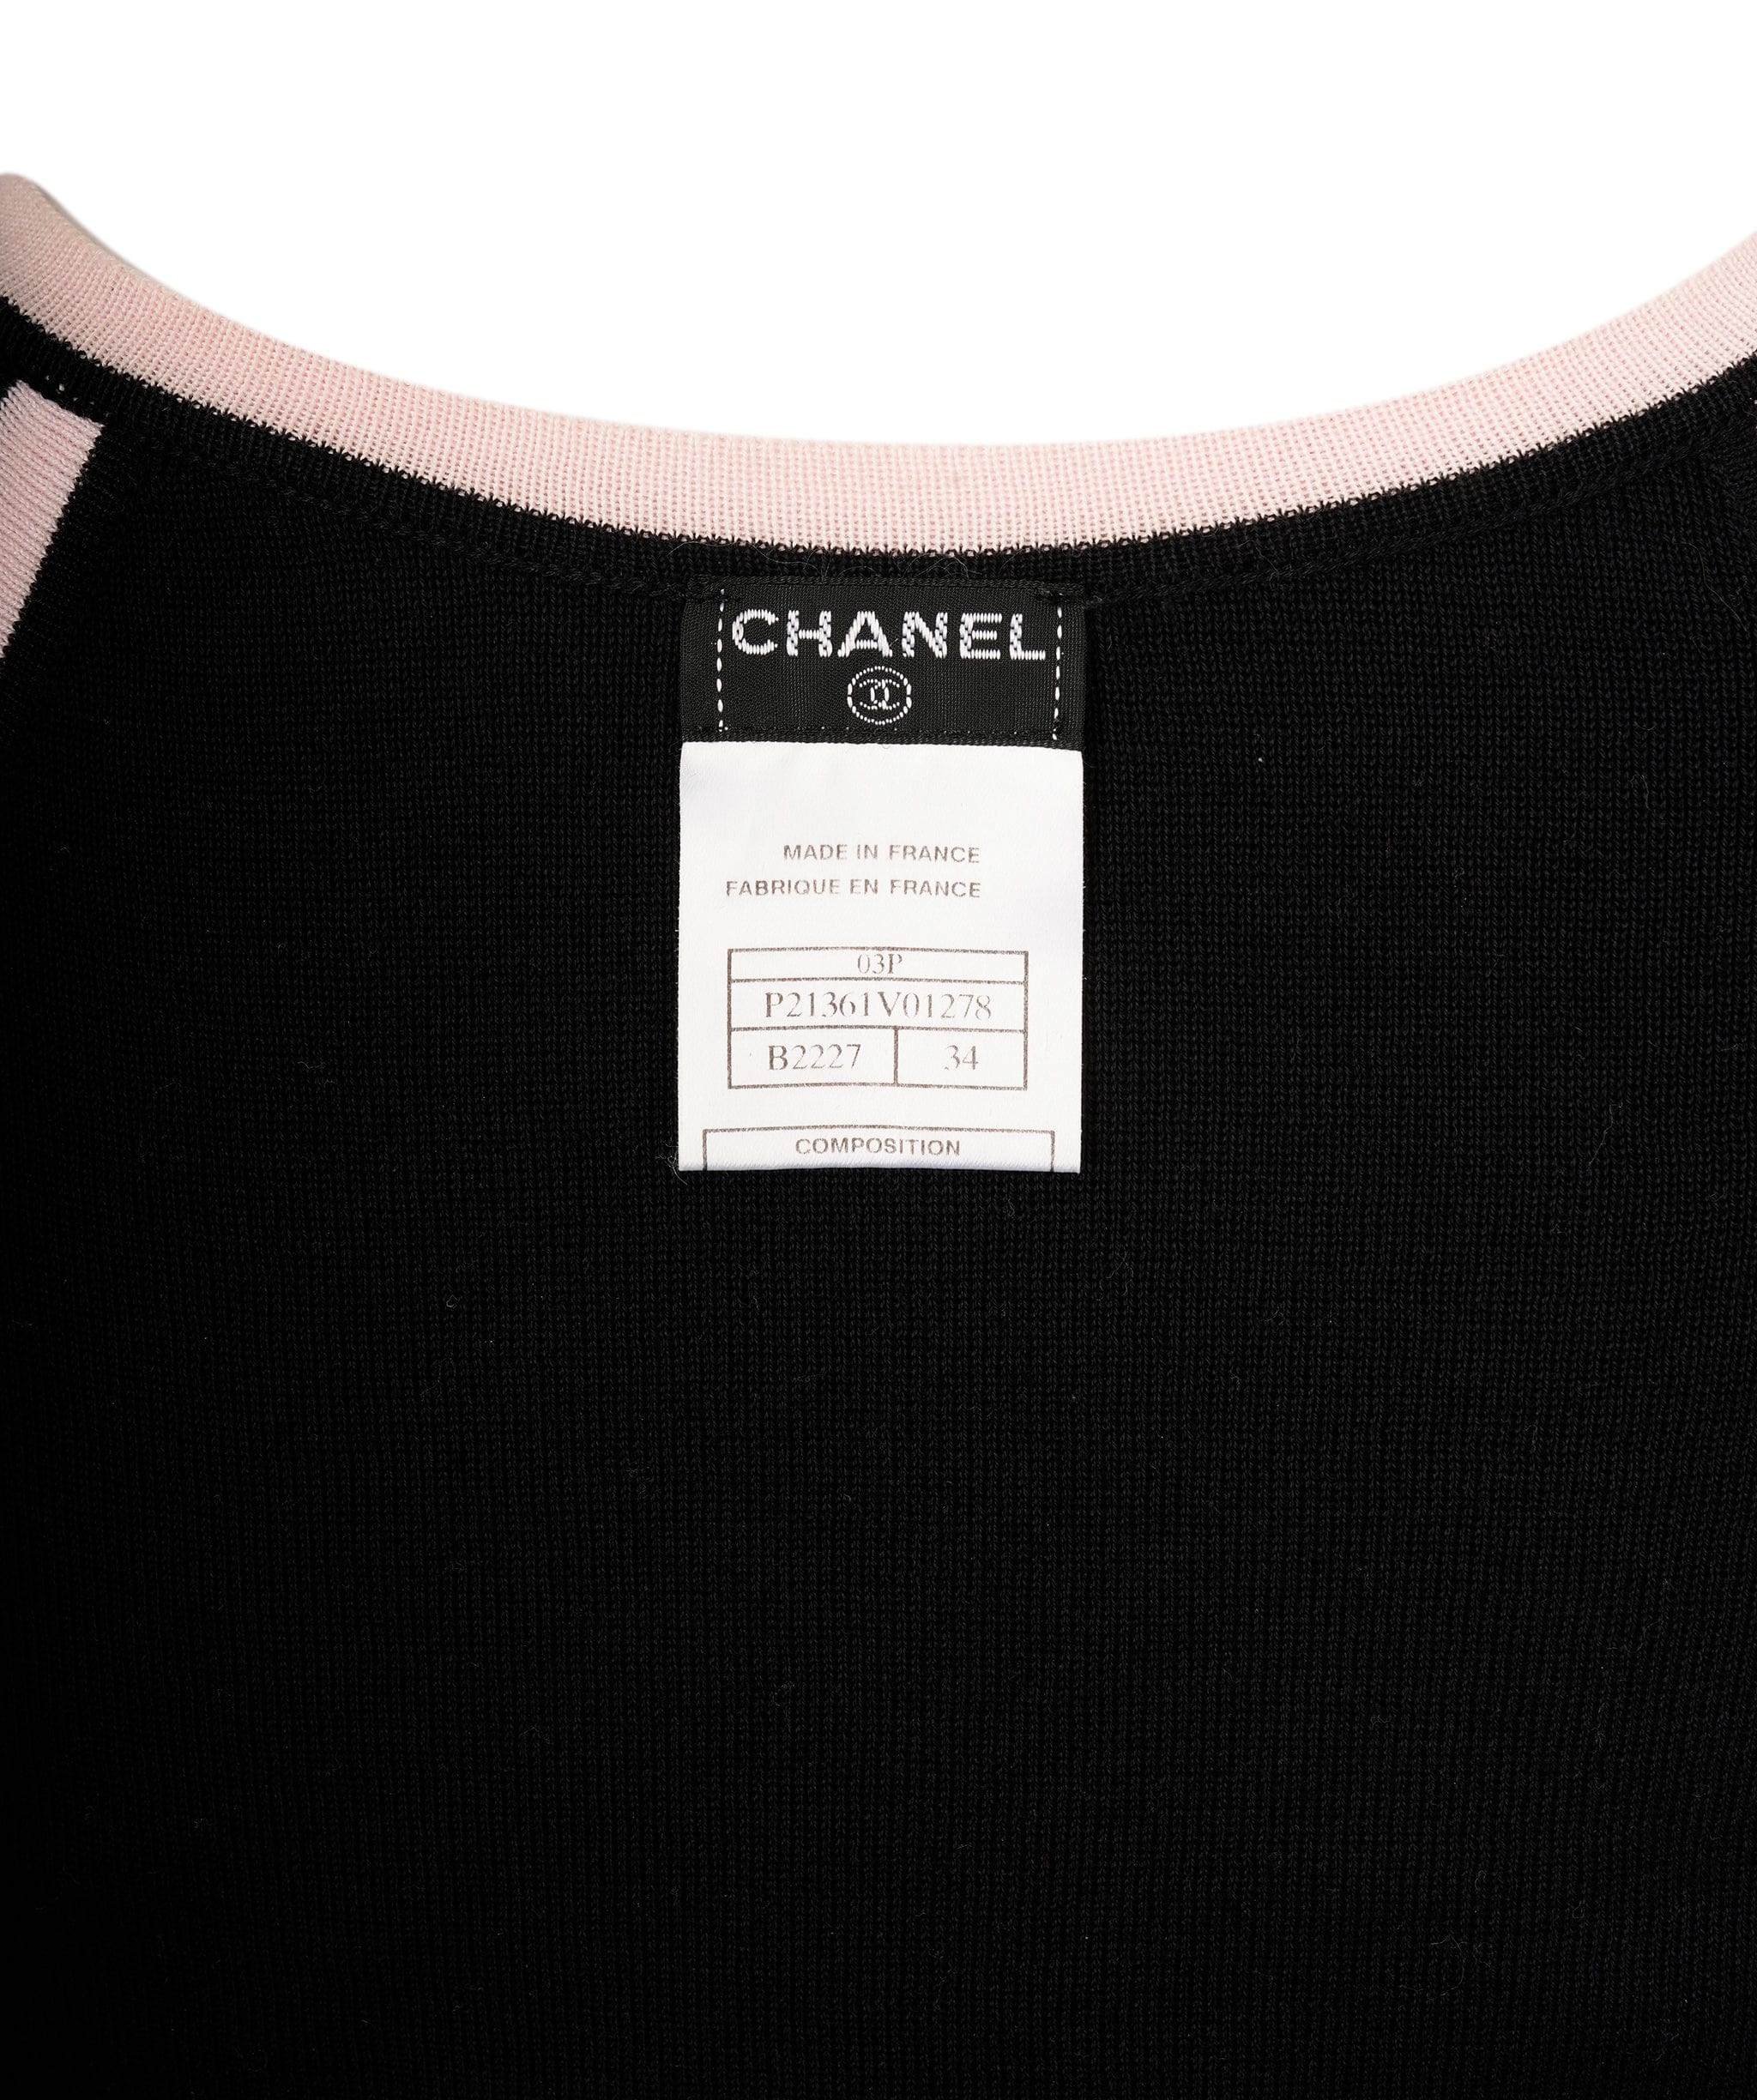 Chanel Chanel 03P Knit Top Black Pink ASL7134